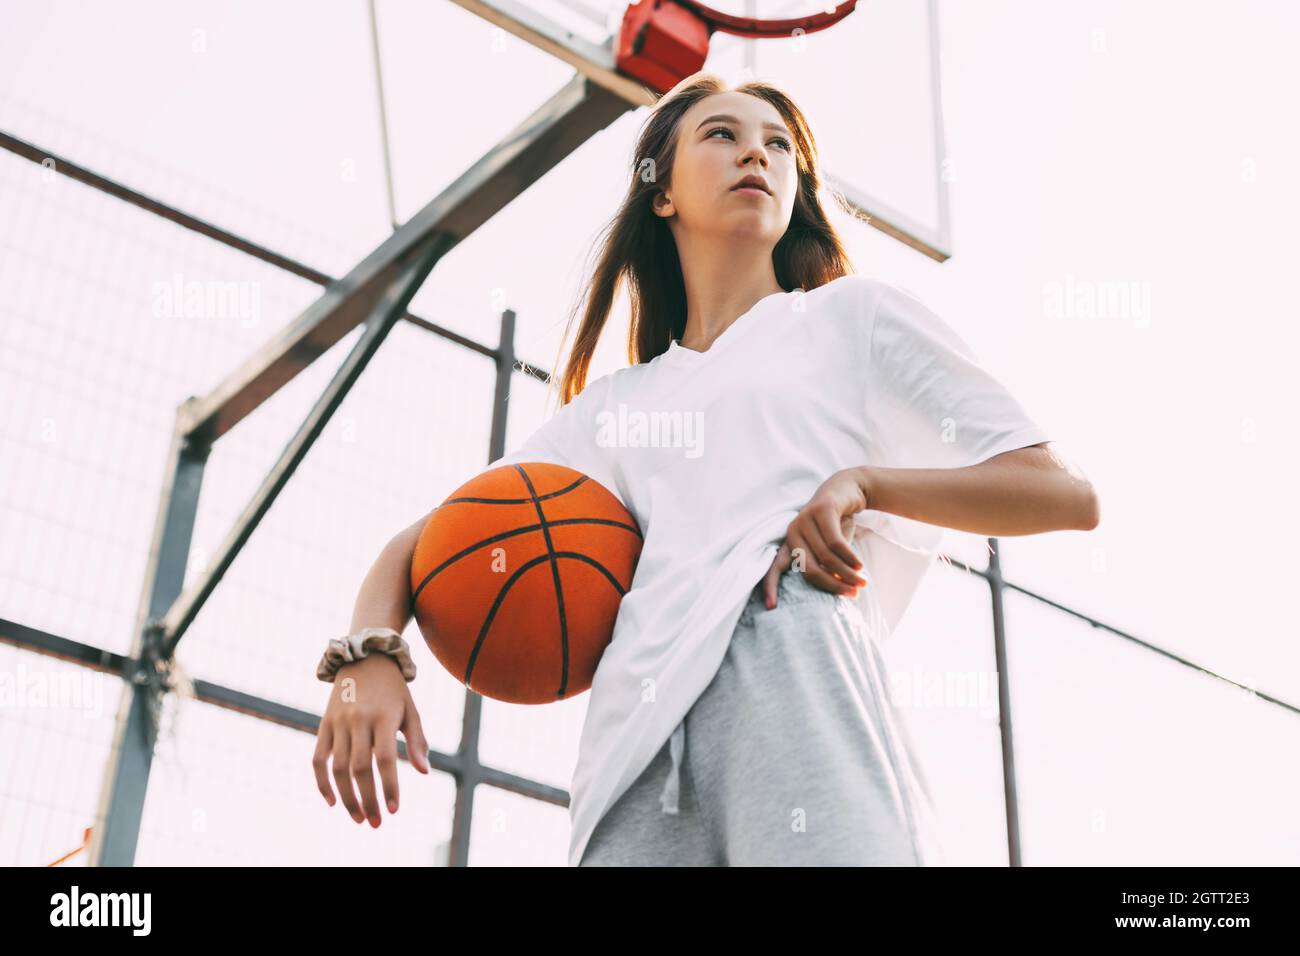 Portrait Of Young Female Basketball Player. Beautiful Teen Girl Playing  Basketball Stock Photo - Alamy